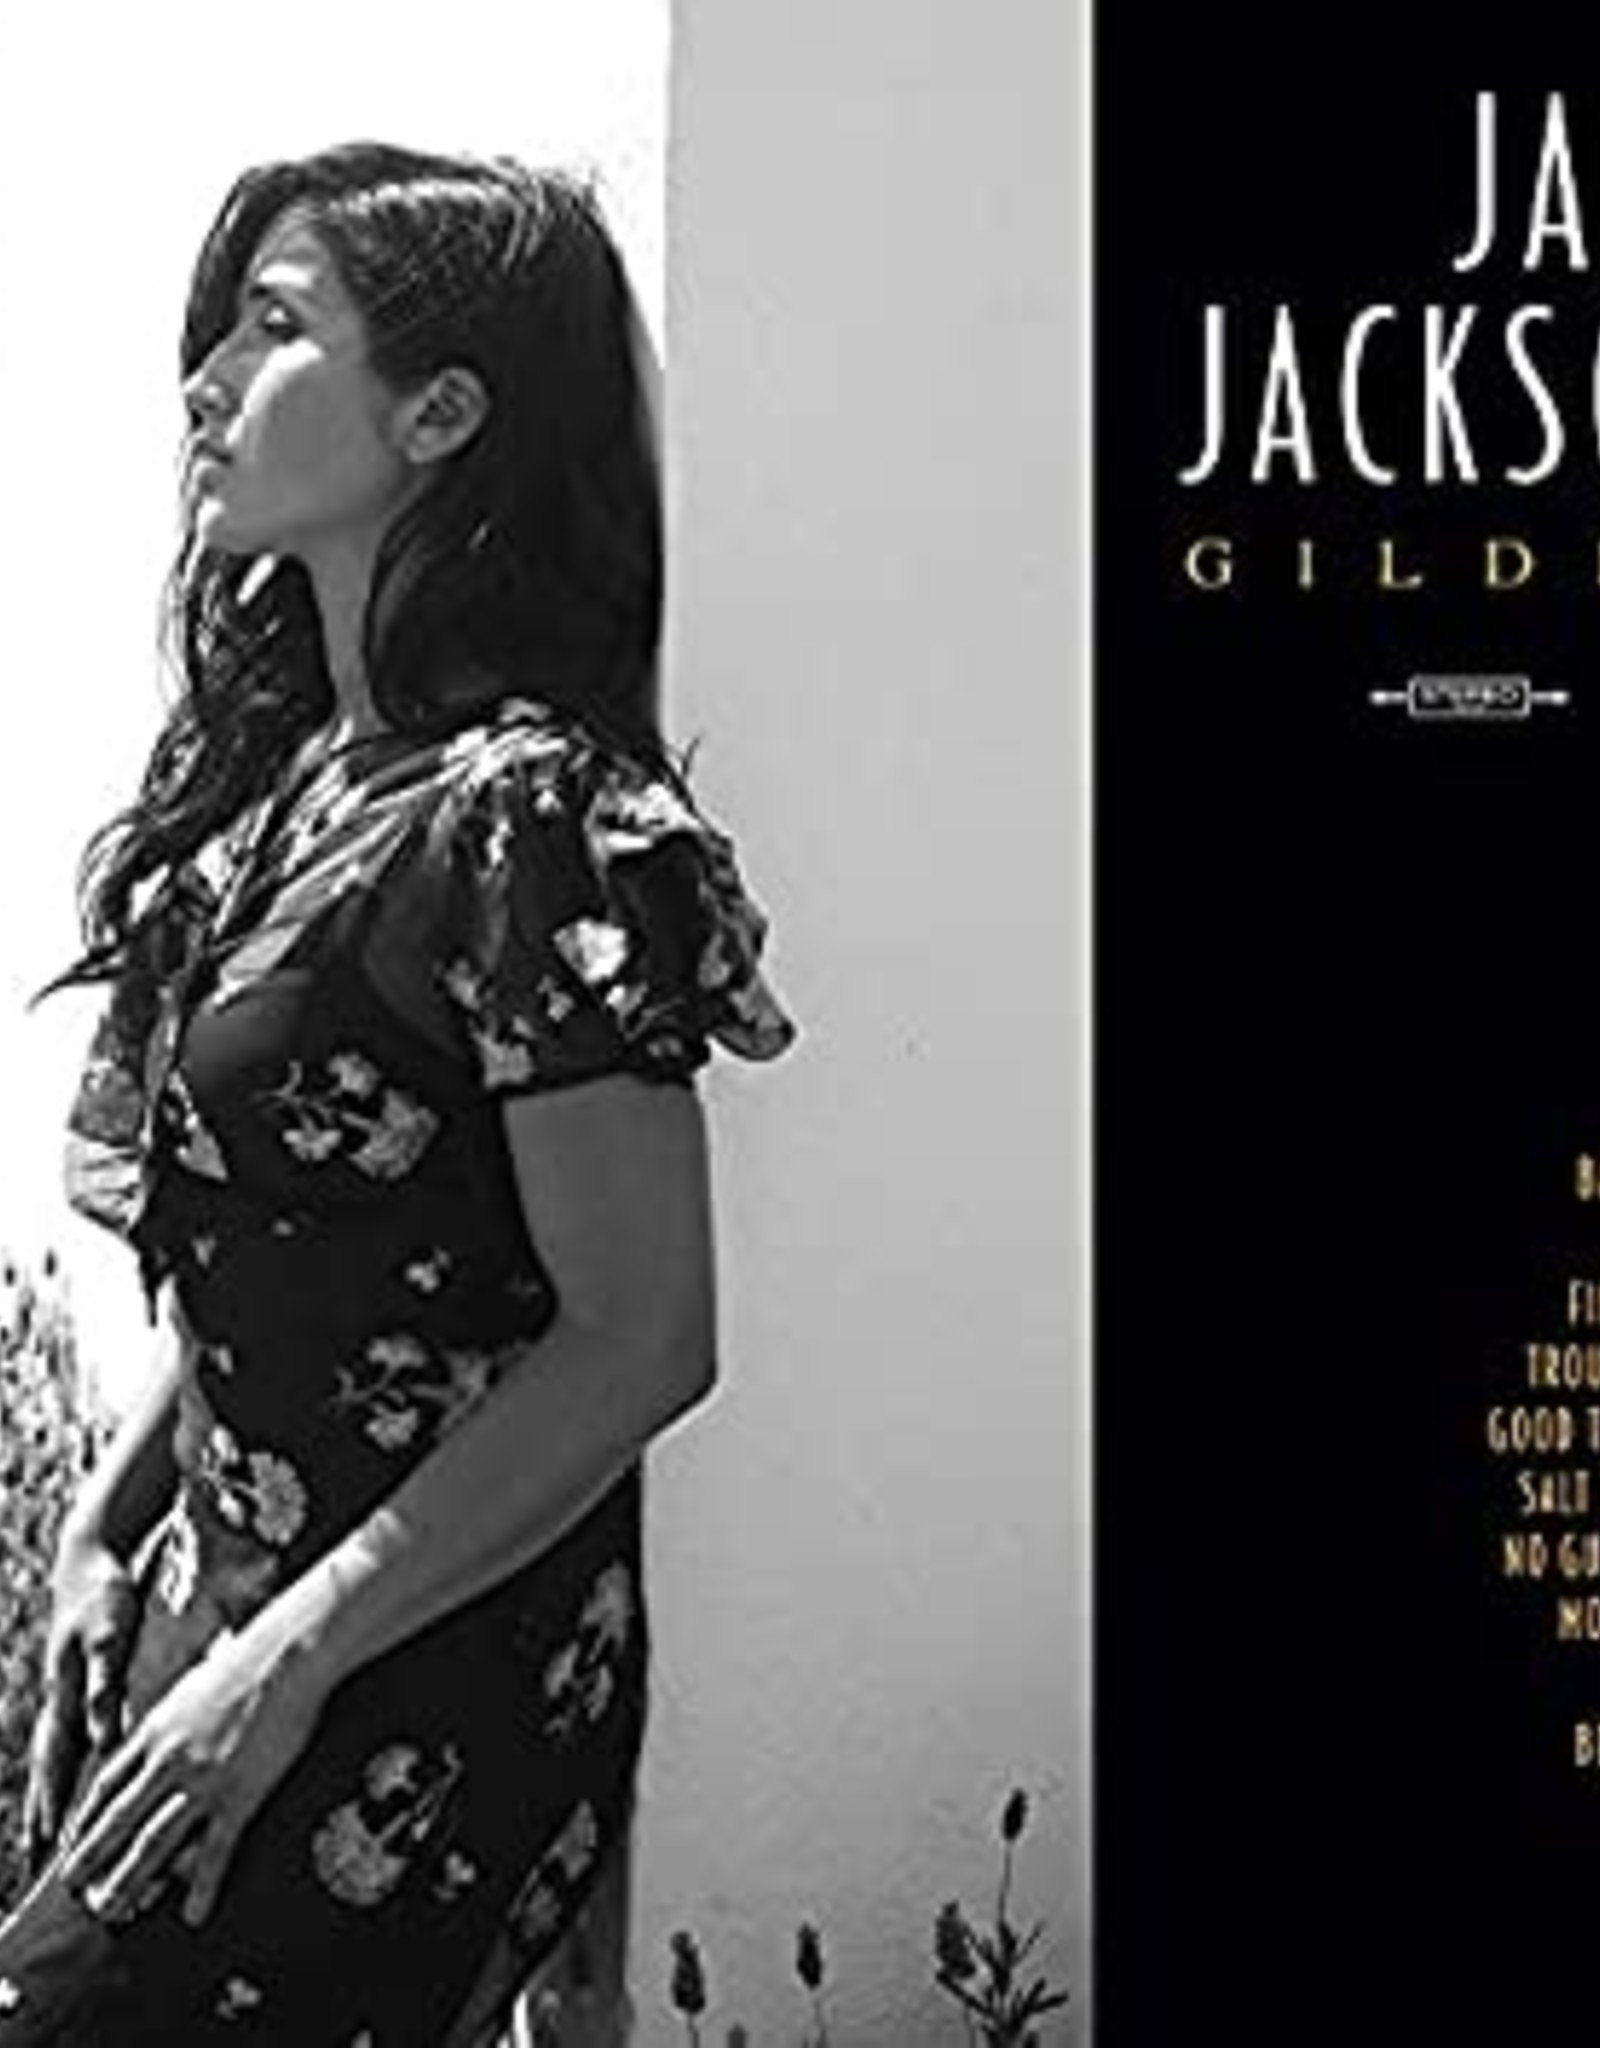 Jade Jackson - Gilded (Includes Download Card)